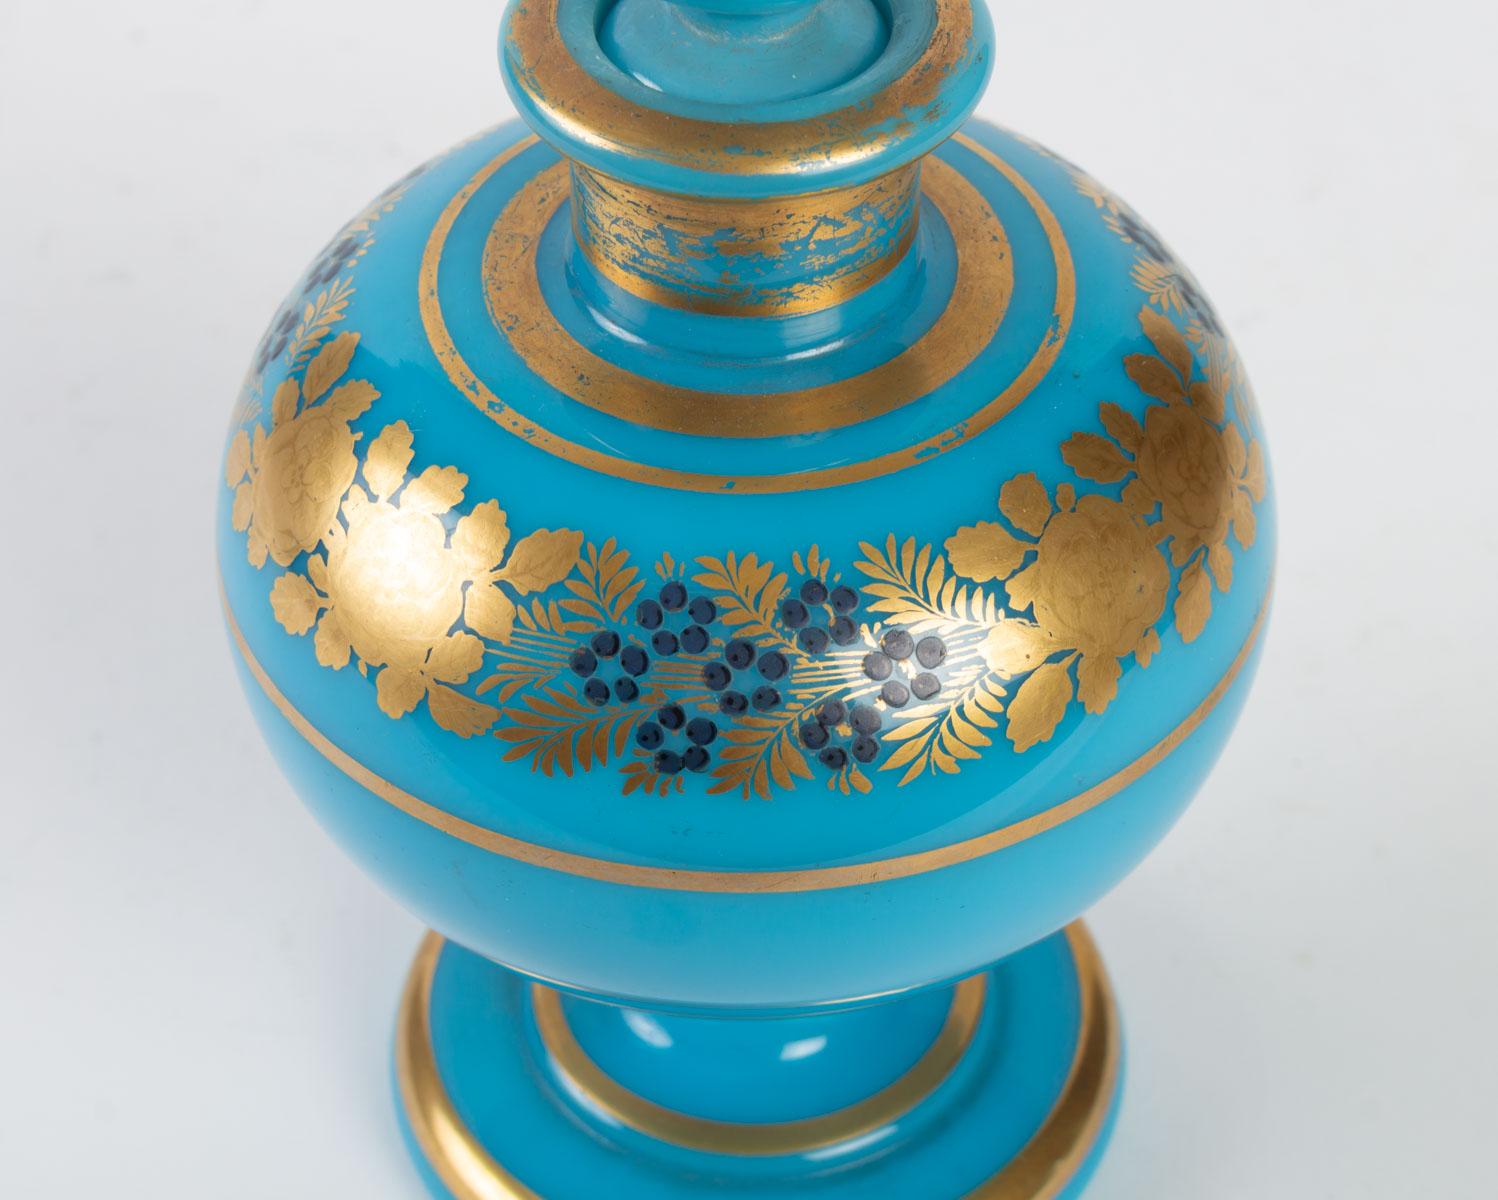 Parfümflasche aus türkisblauem Opal (Vergoldet)